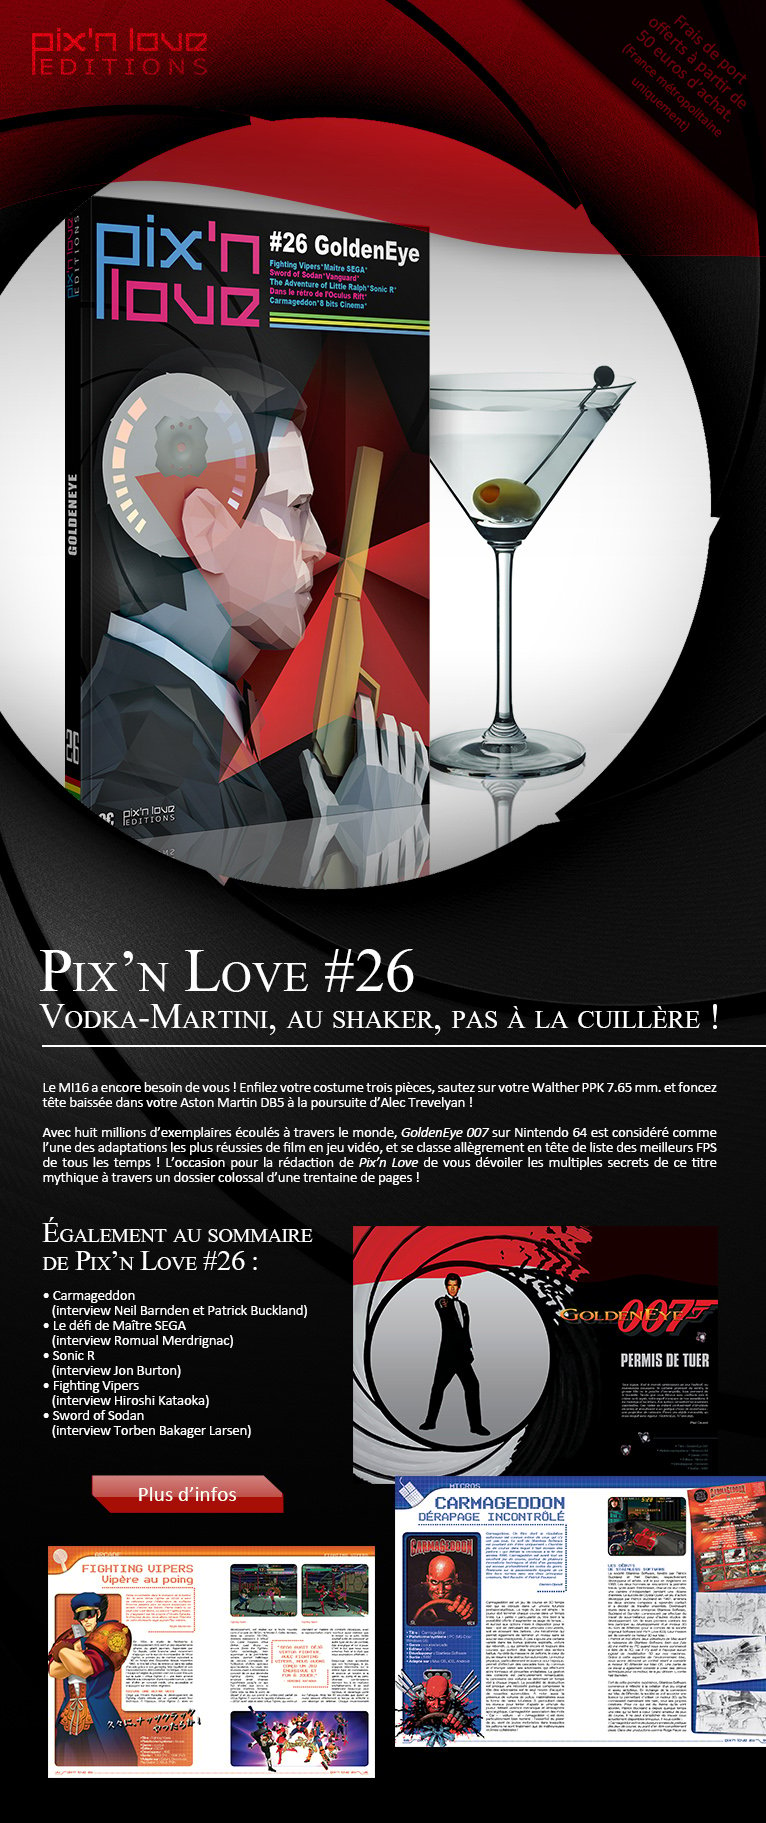 Pix'n Love #26 disponible !